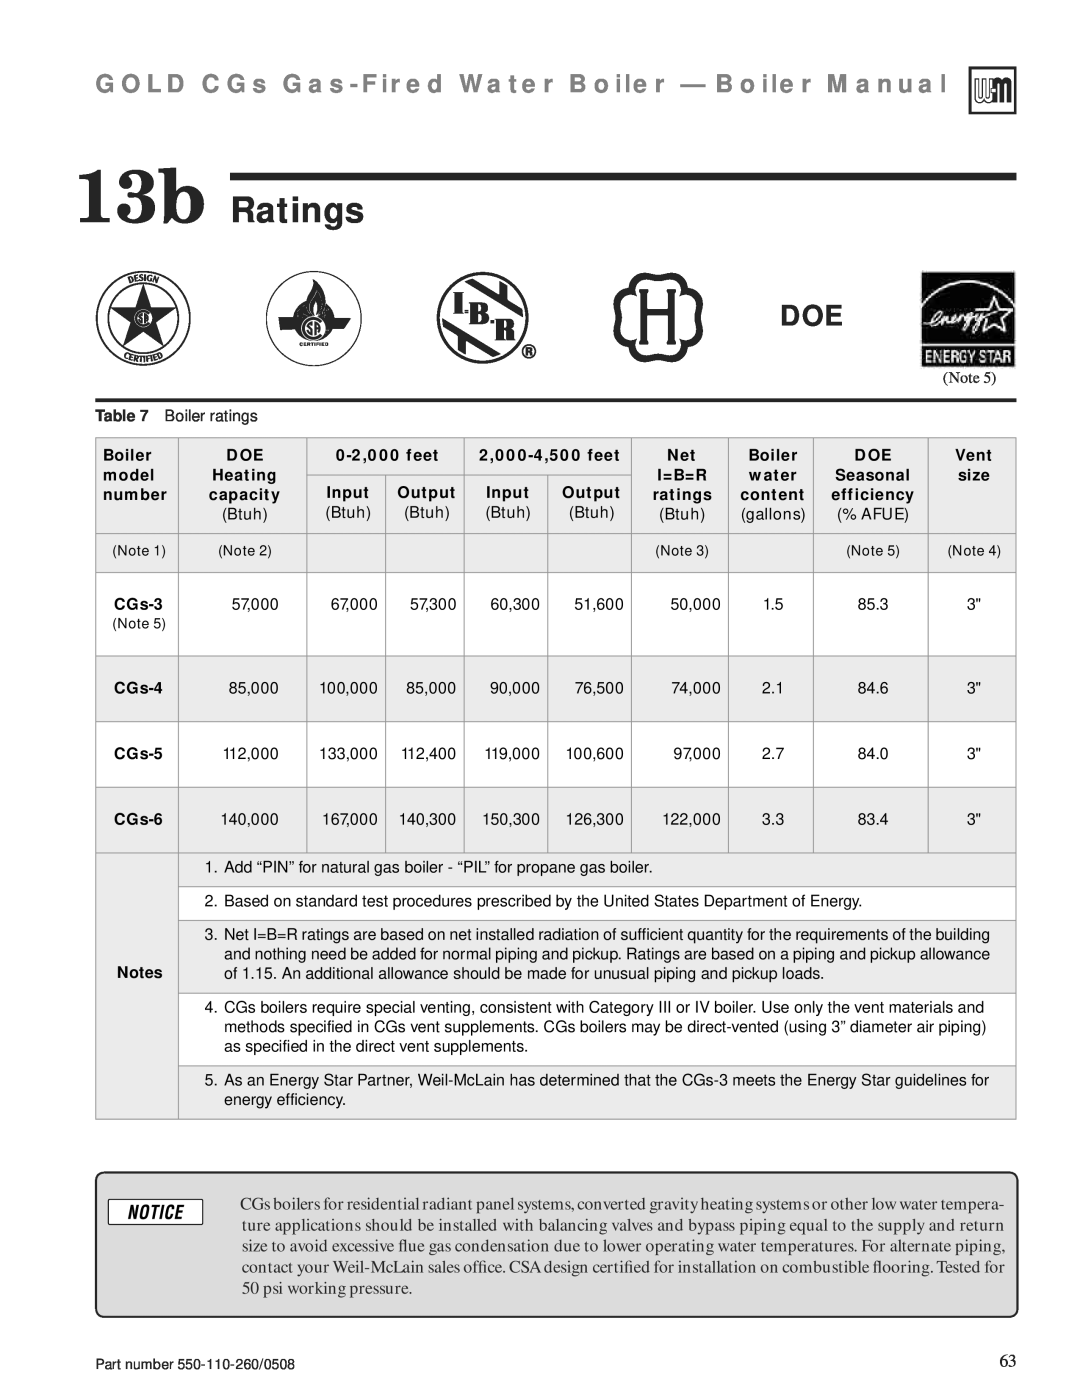 Weil-McLain 550-110-260/0508 manual 13b Ratings, GOLD CGs Gas-FiredWater Boiler — Boiler Manual, Boiler ratings 